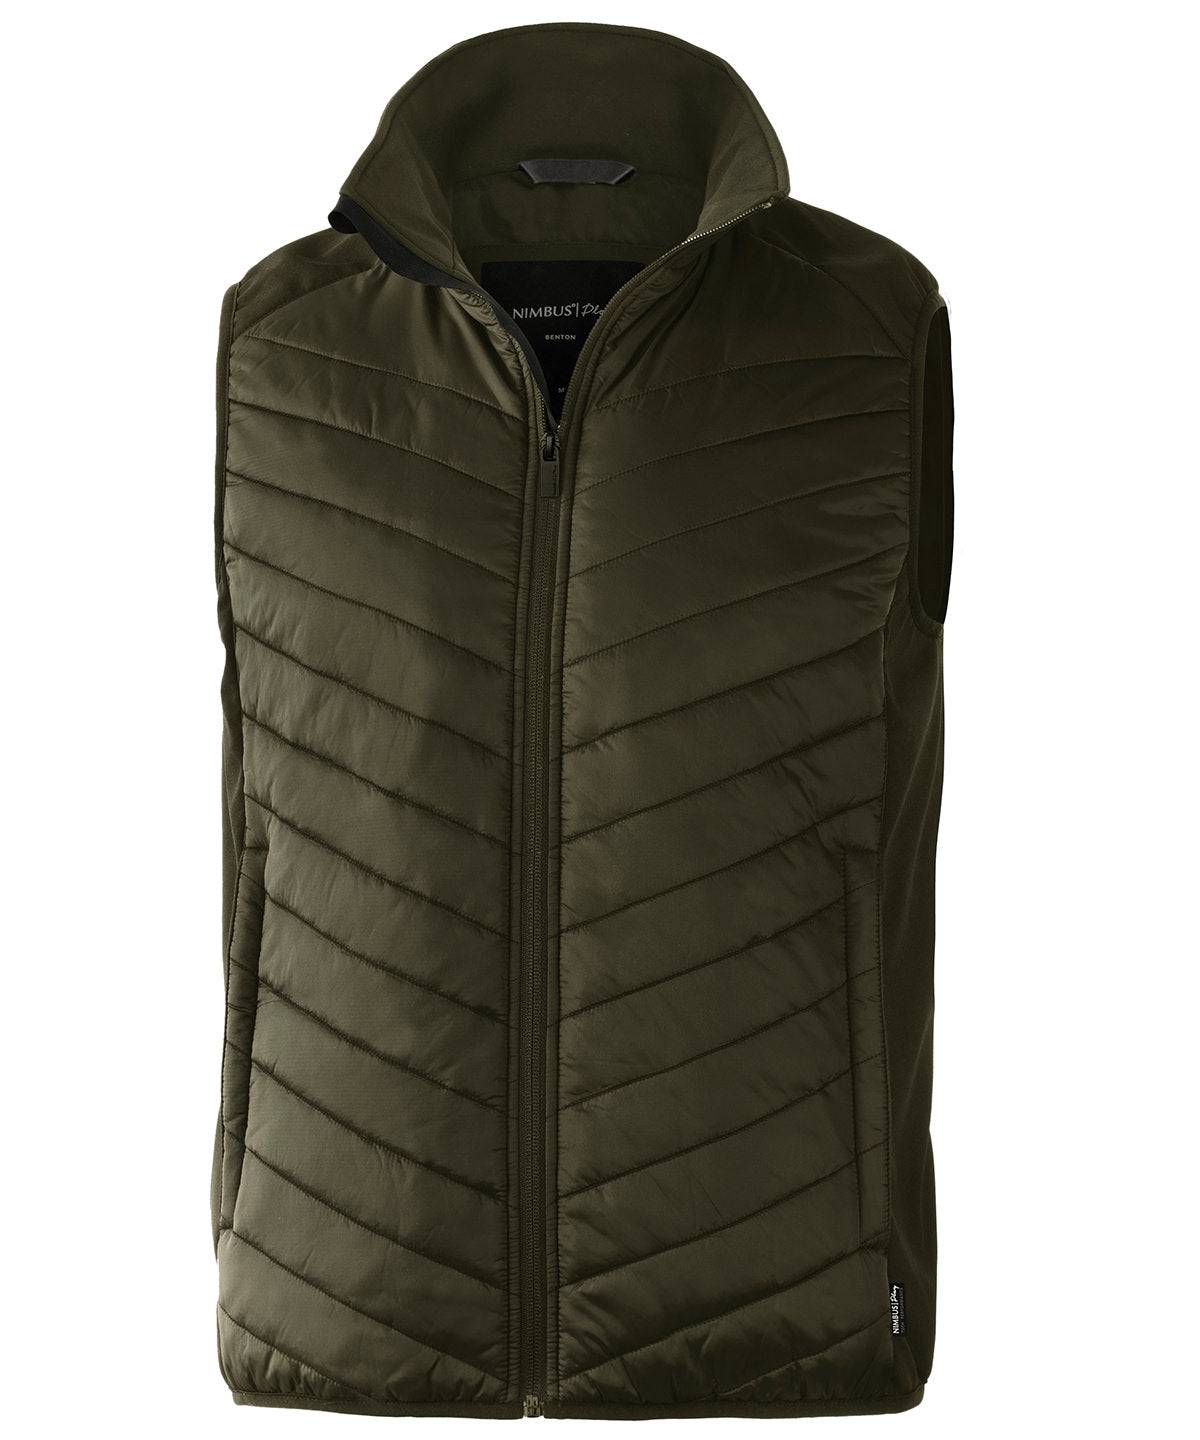 Olive - Benton – versatile hybrid vest